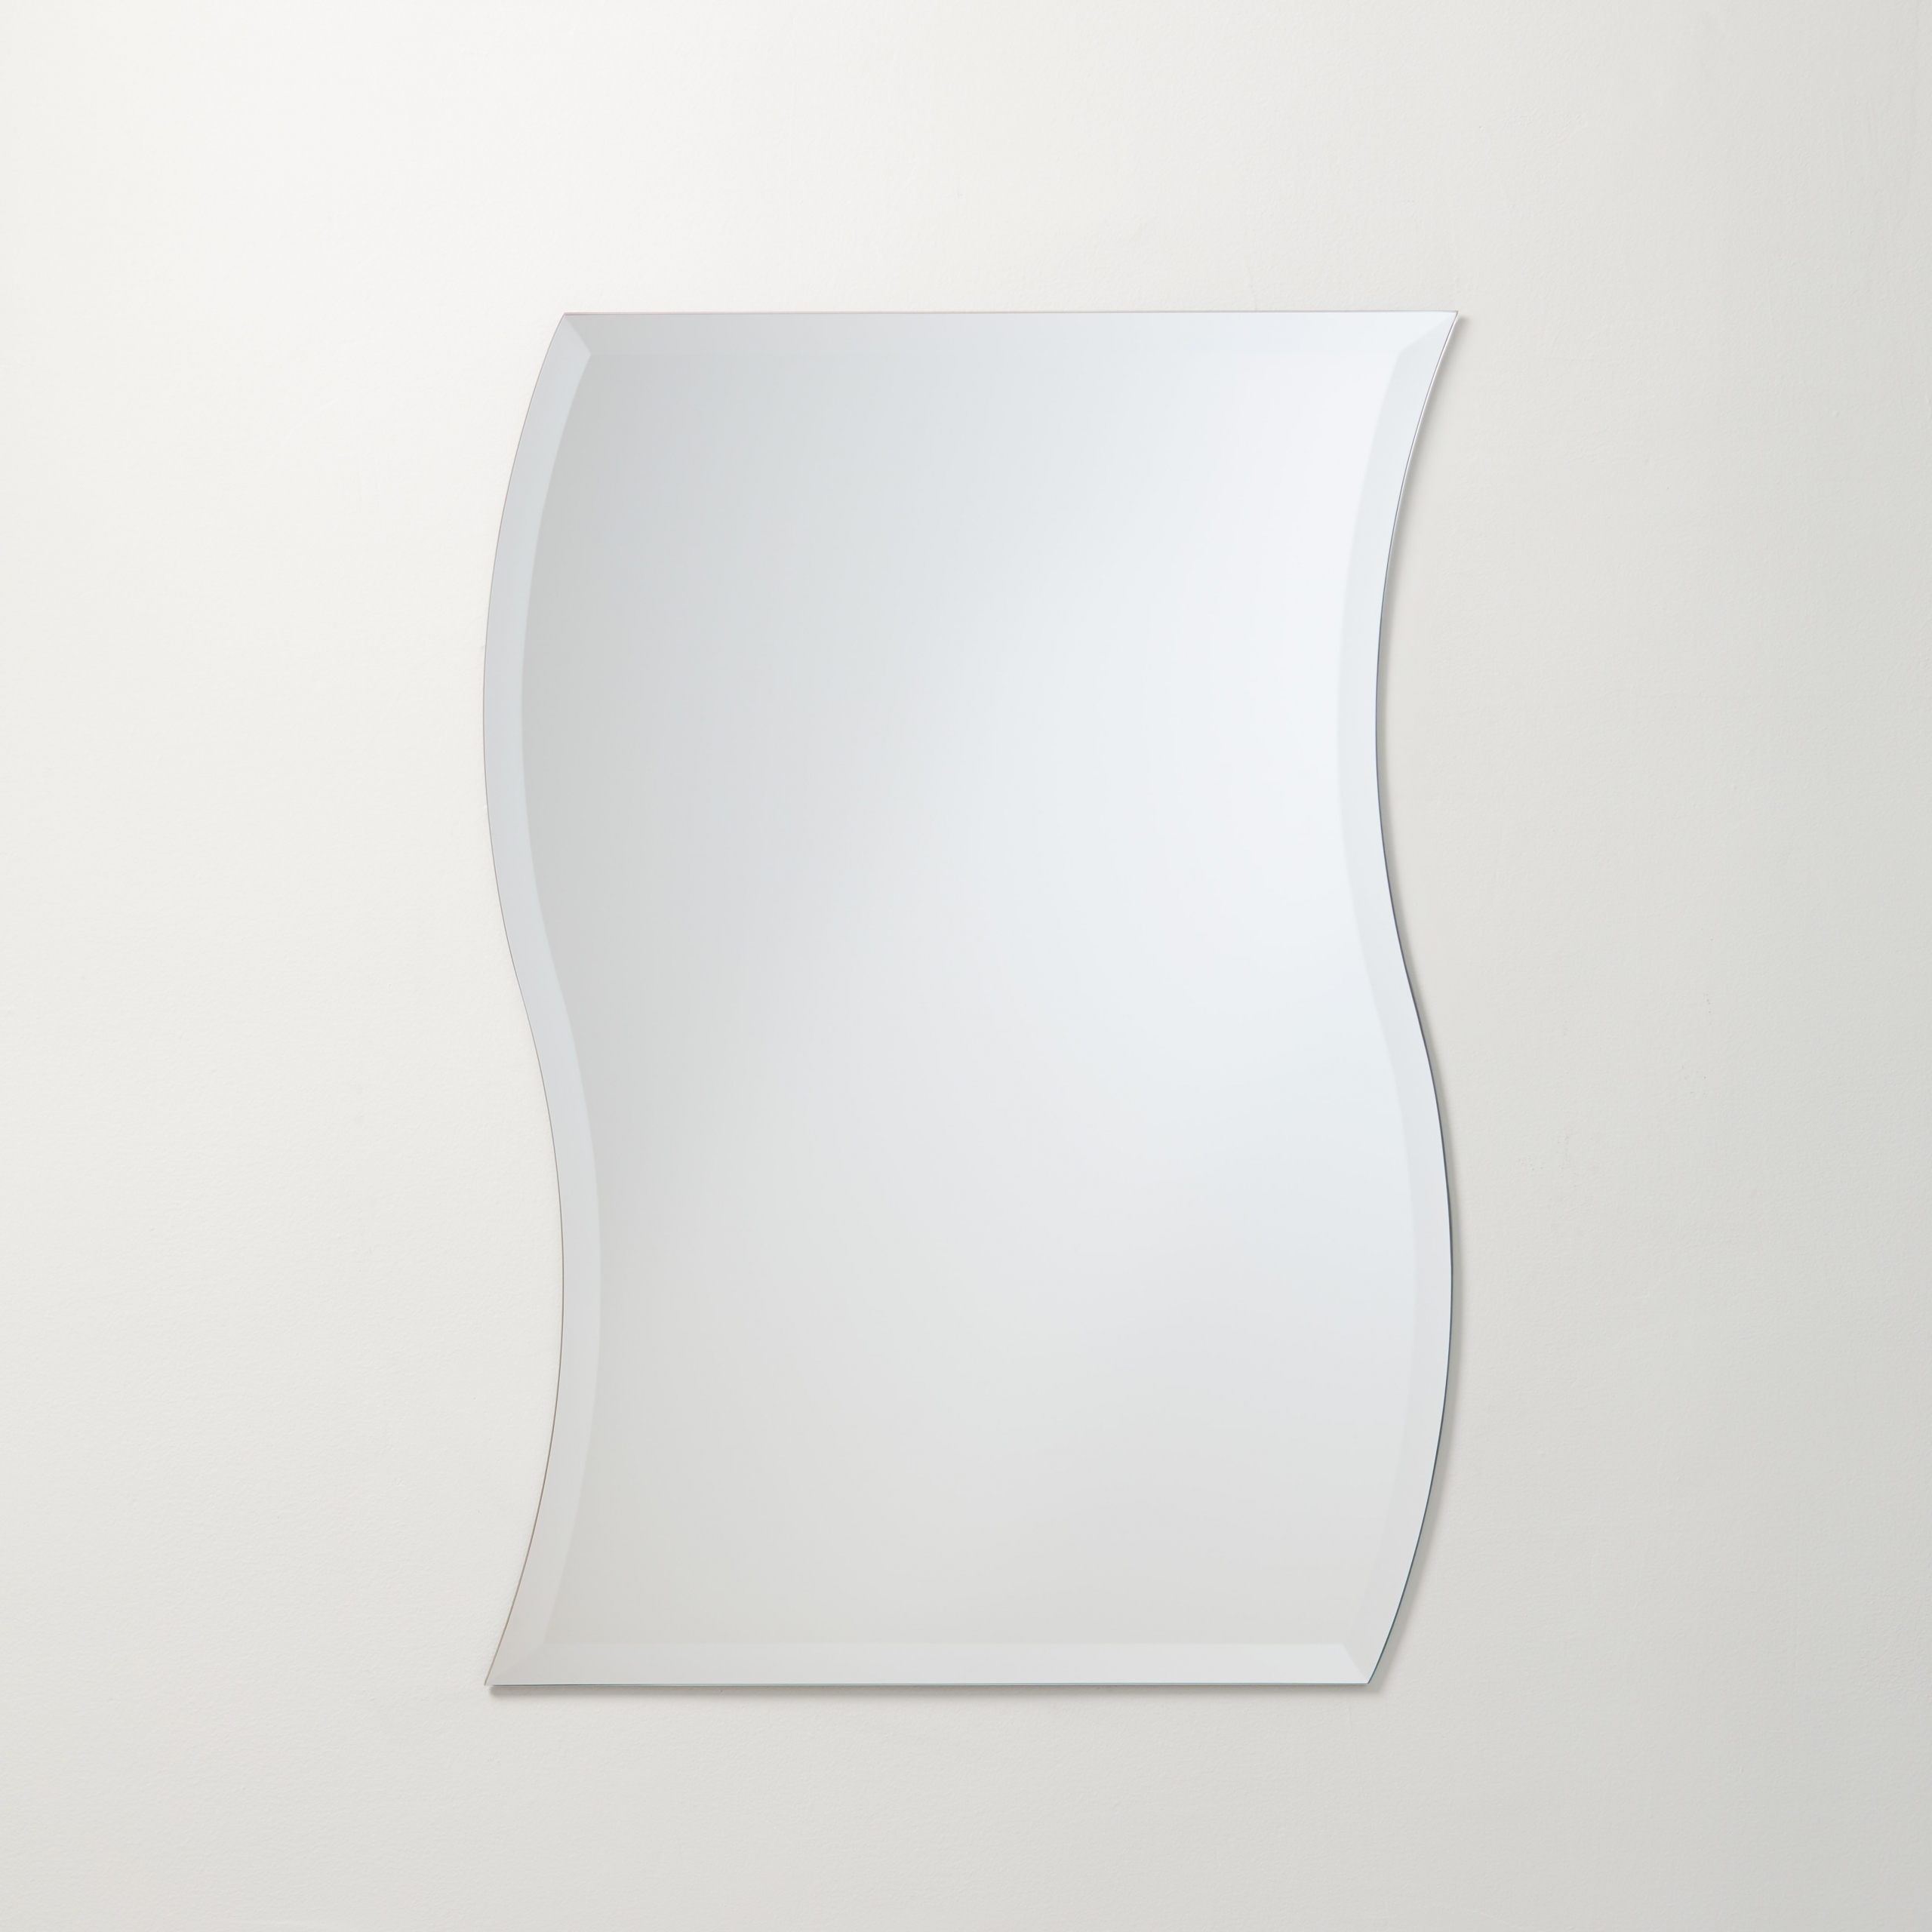 Frameless beveled wave/swerve mirror hanging on beige wall